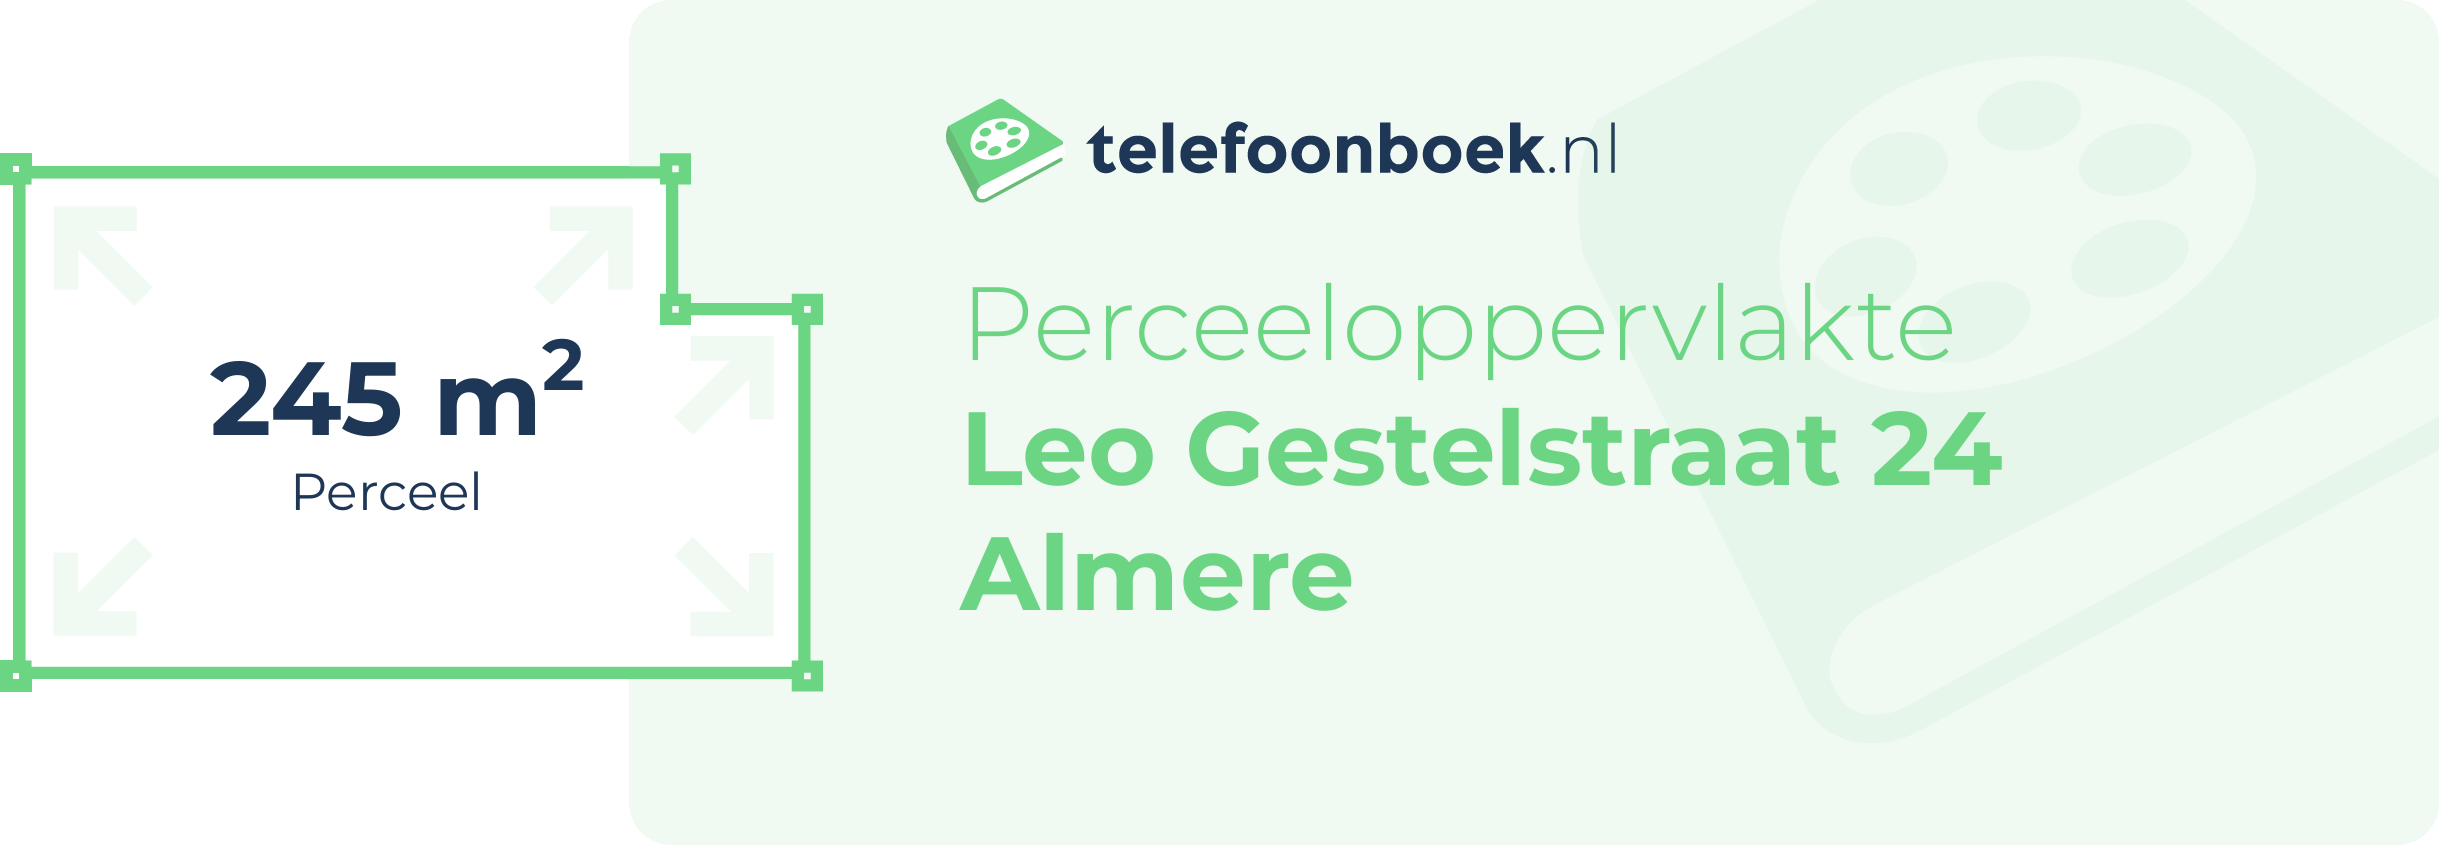 Perceeloppervlakte Leo Gestelstraat 24 Almere